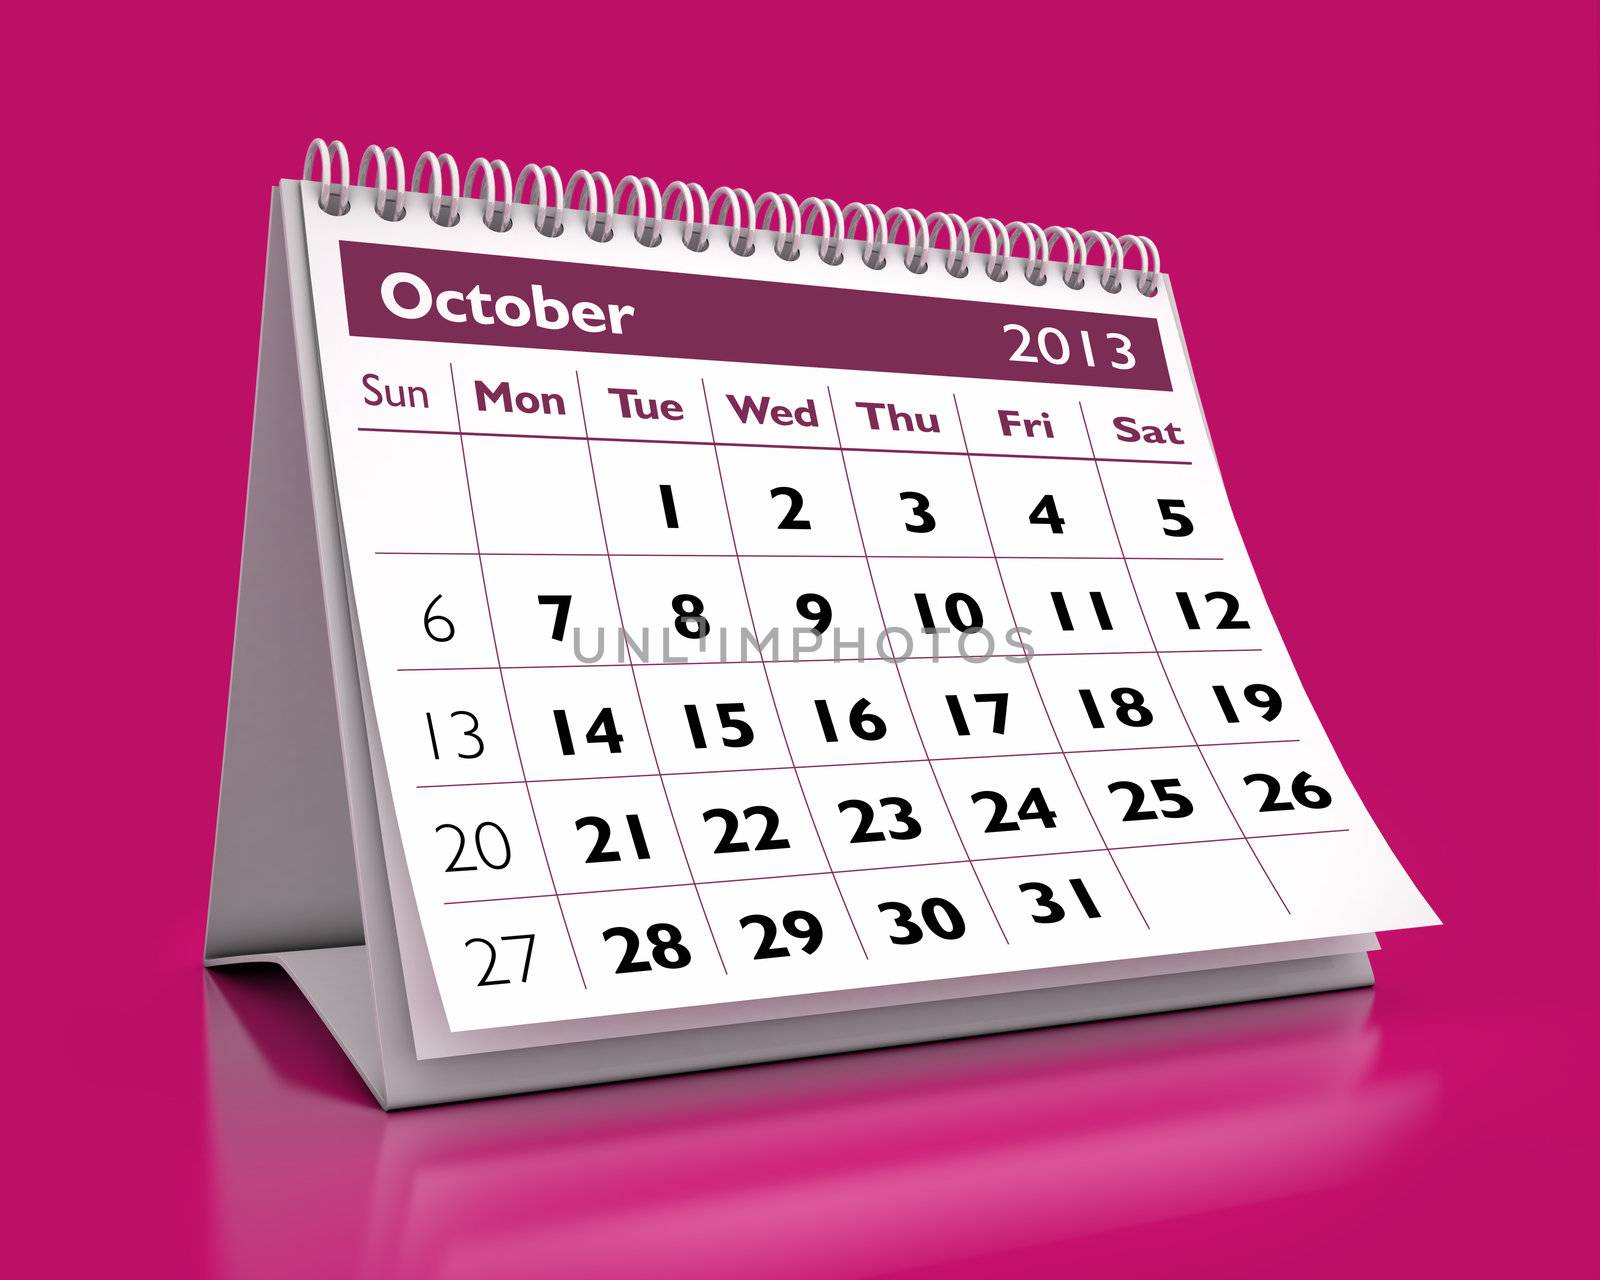 October 2013 Calendar by benjaminet